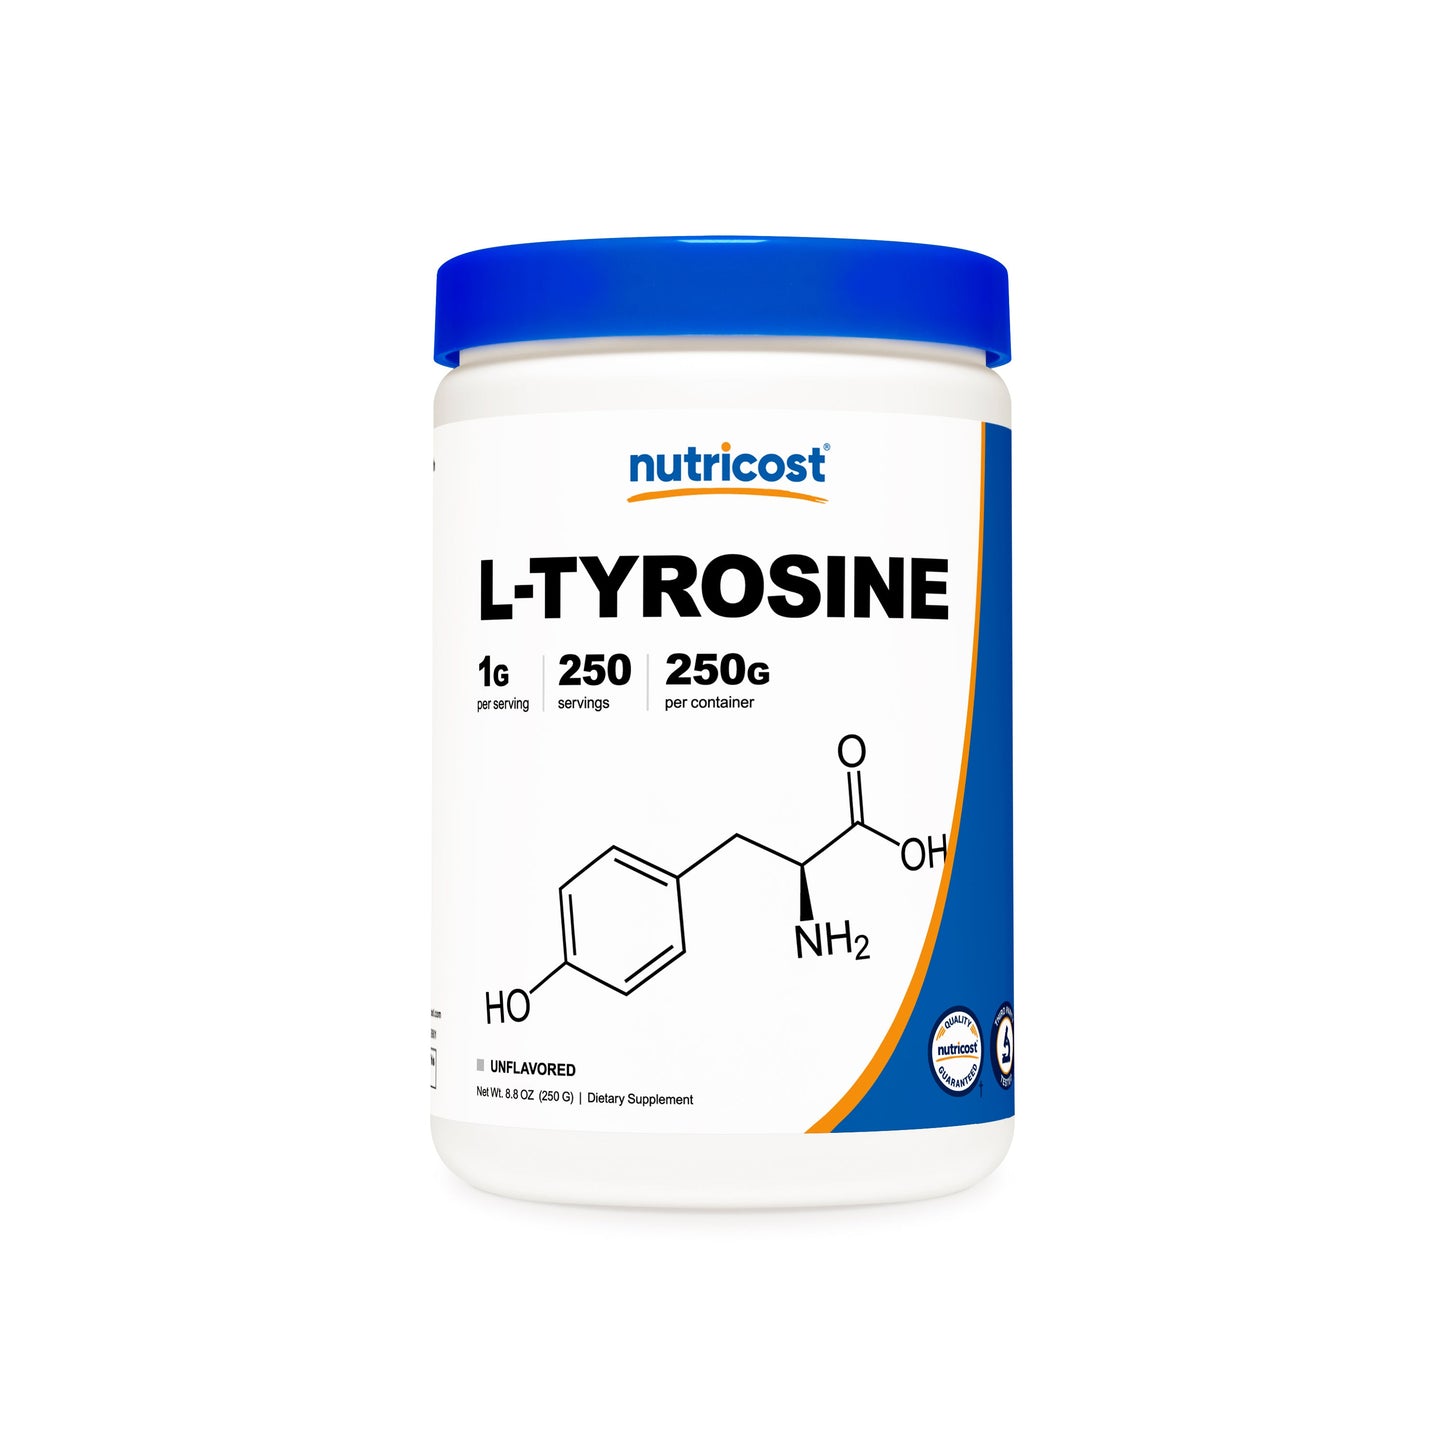 Nutricost L-Tyrosine Powder